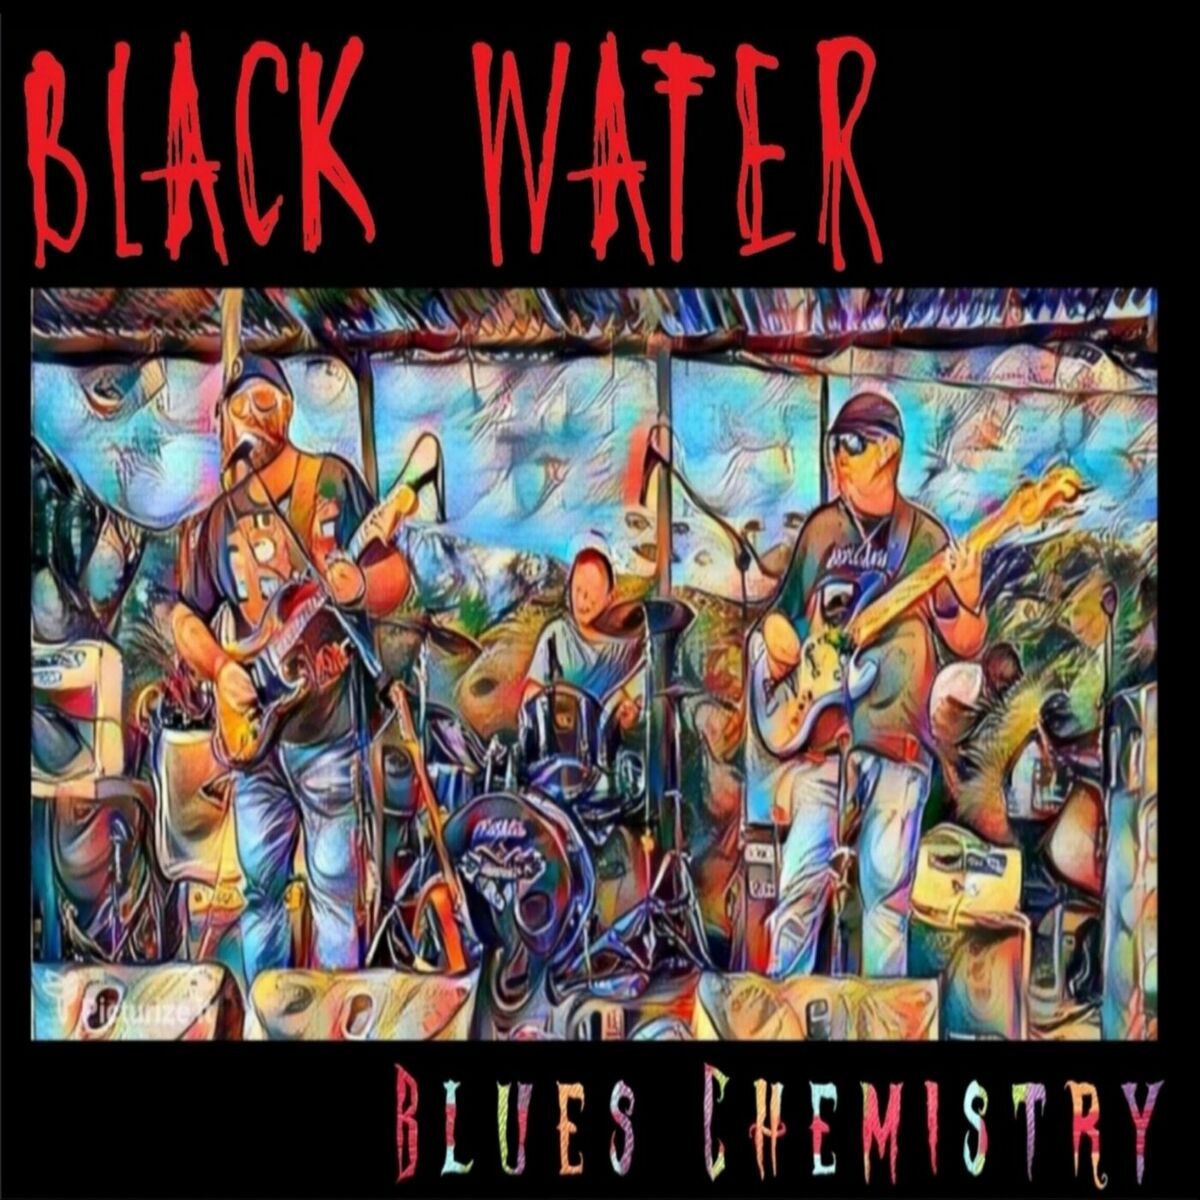 Blackwater: albums